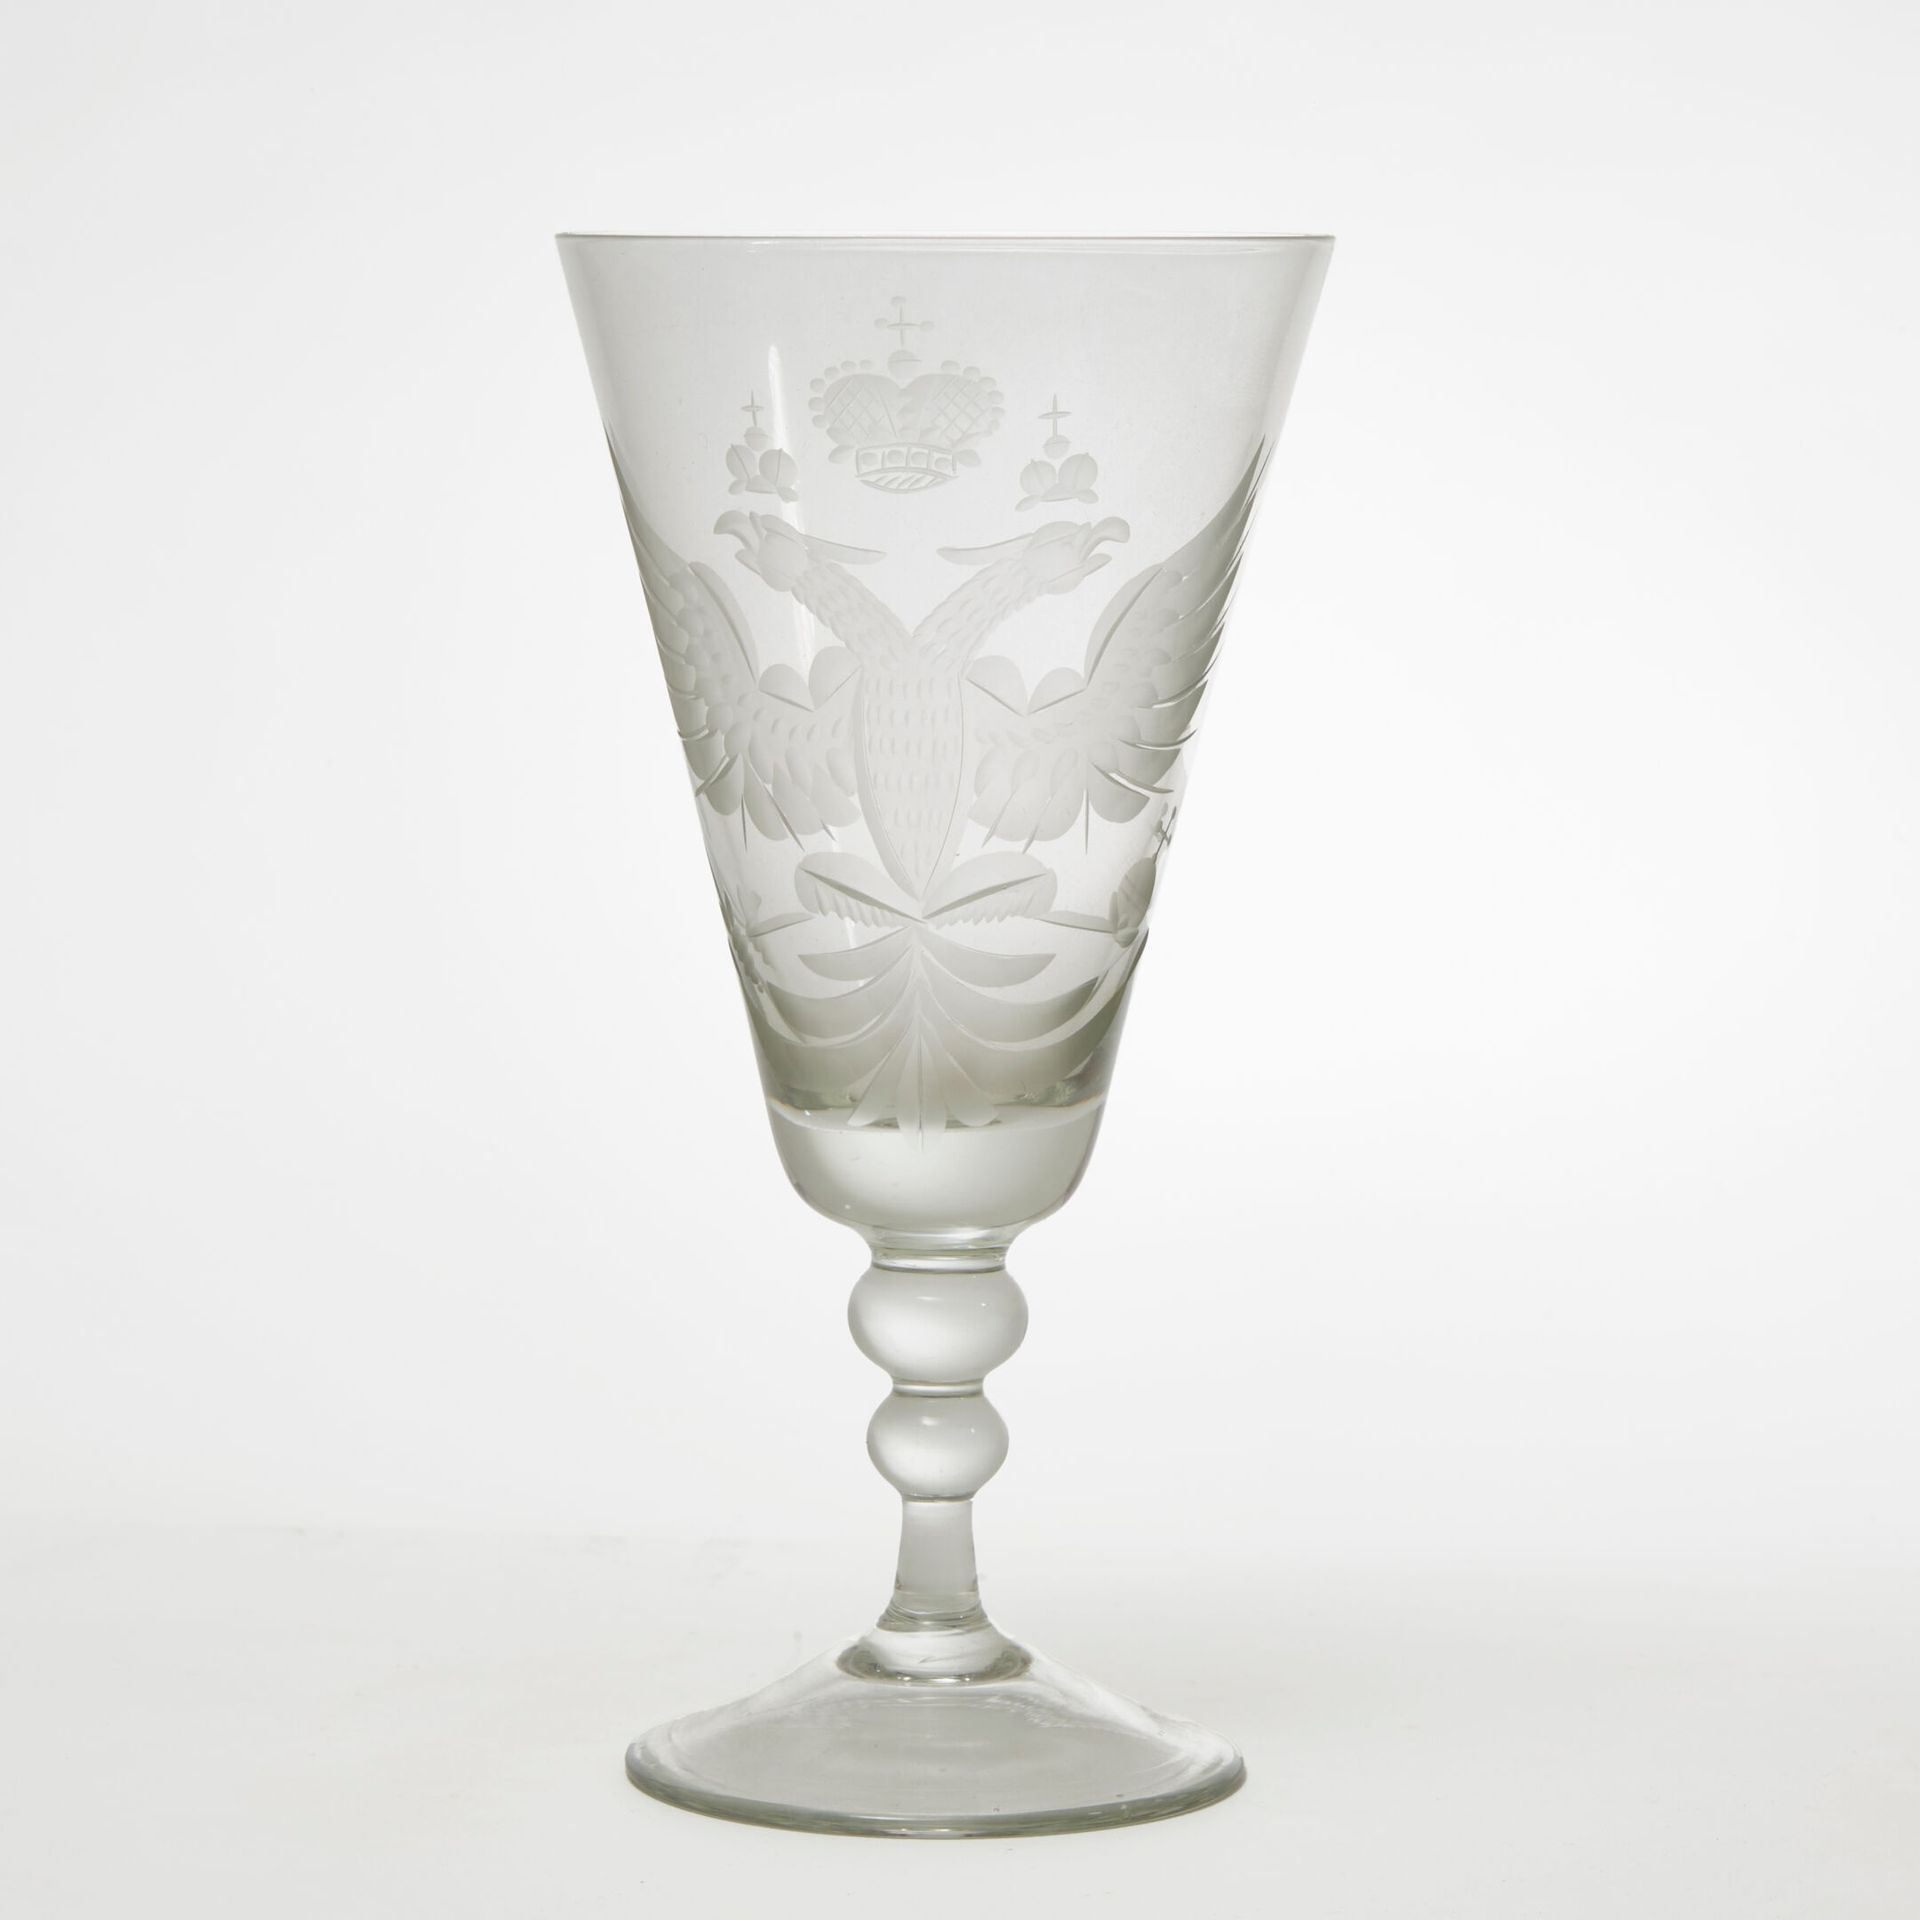 TRAVAIL MODERNE 现代作品
现代玻璃杯，18 世纪风格，刻有双头鹰装饰。 
高 16.5 厘米